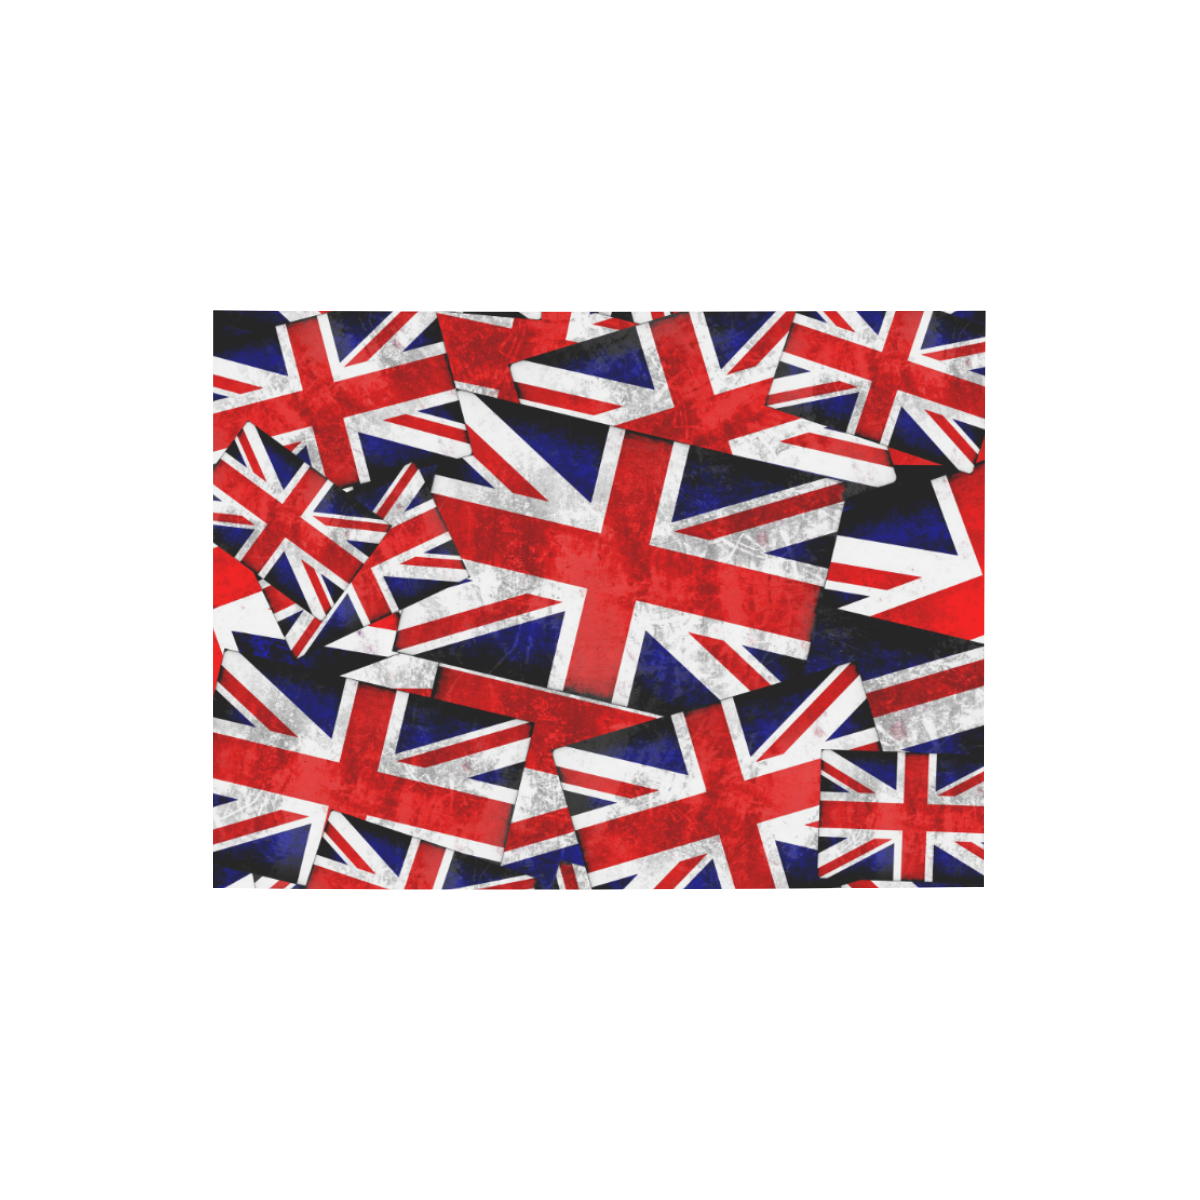 Union Jack British UK Flag Photo Panel for Tabletop Display 8"x6"